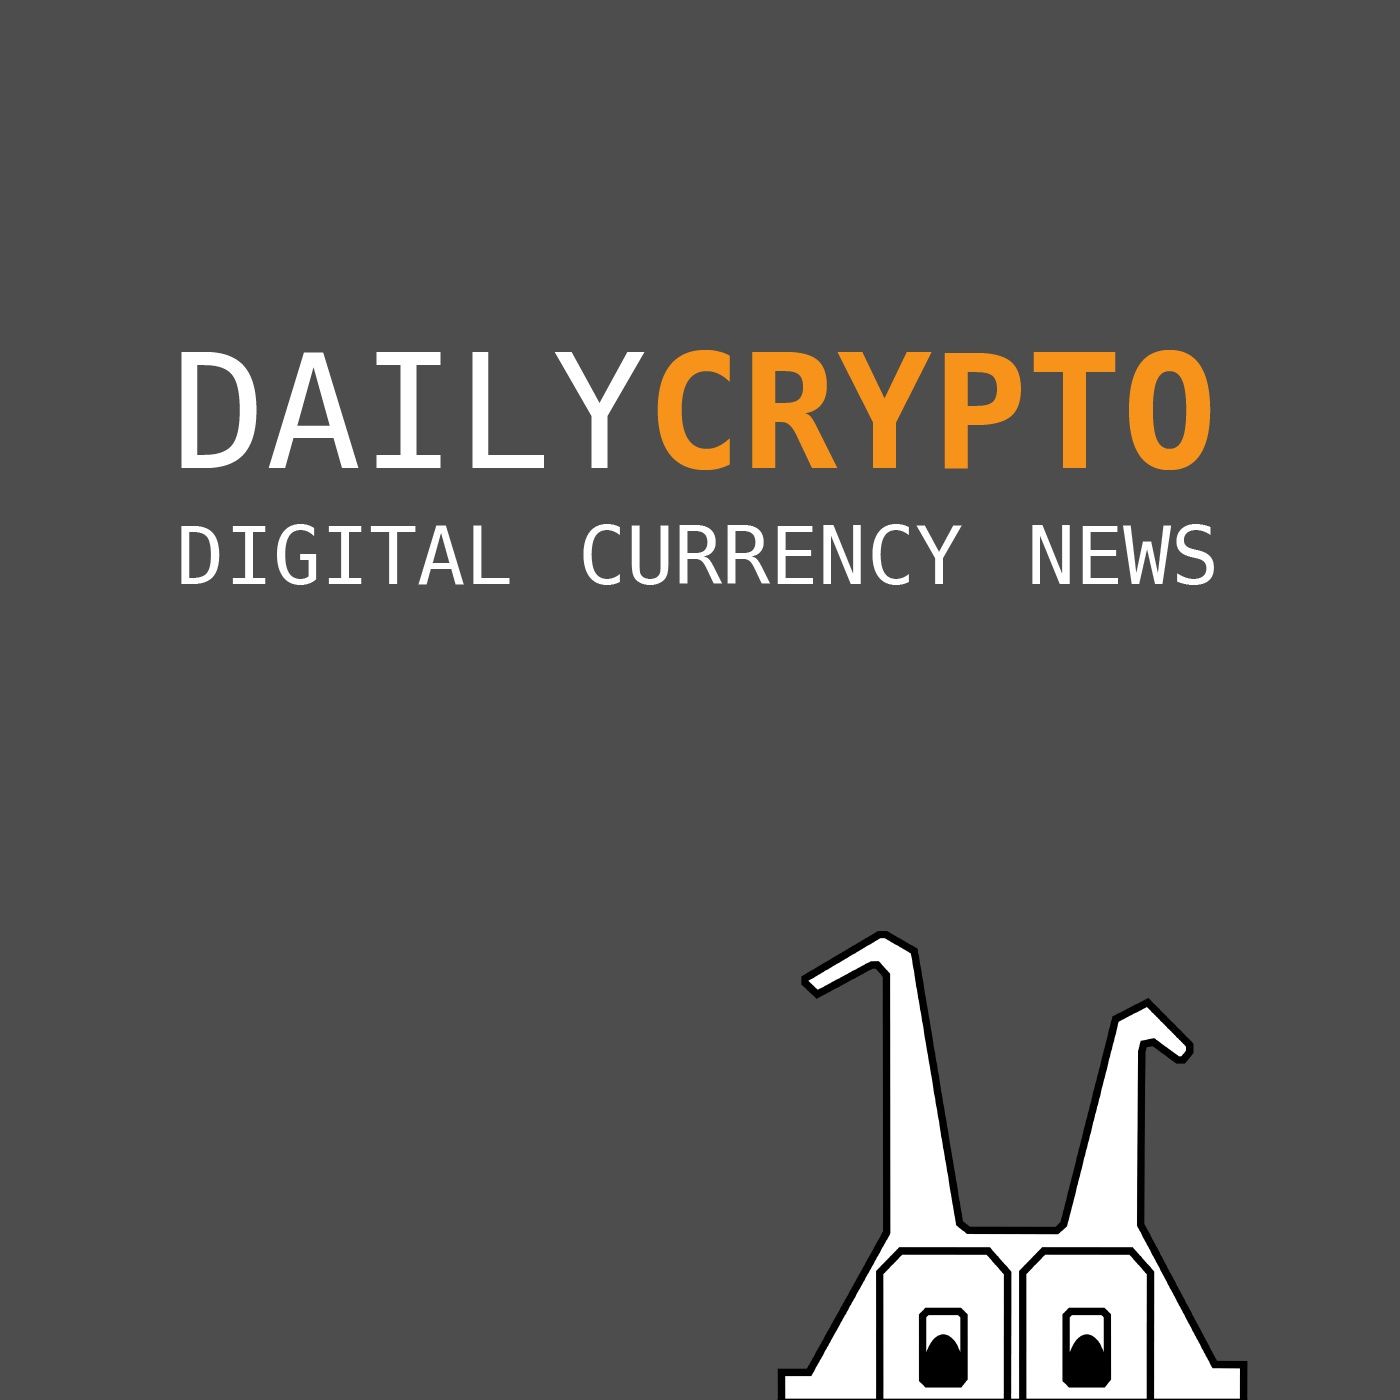 Daily Crypto - Bitcoin, Blockchain, Ethereum, Altcoin & Digital Cryptocurrency World News